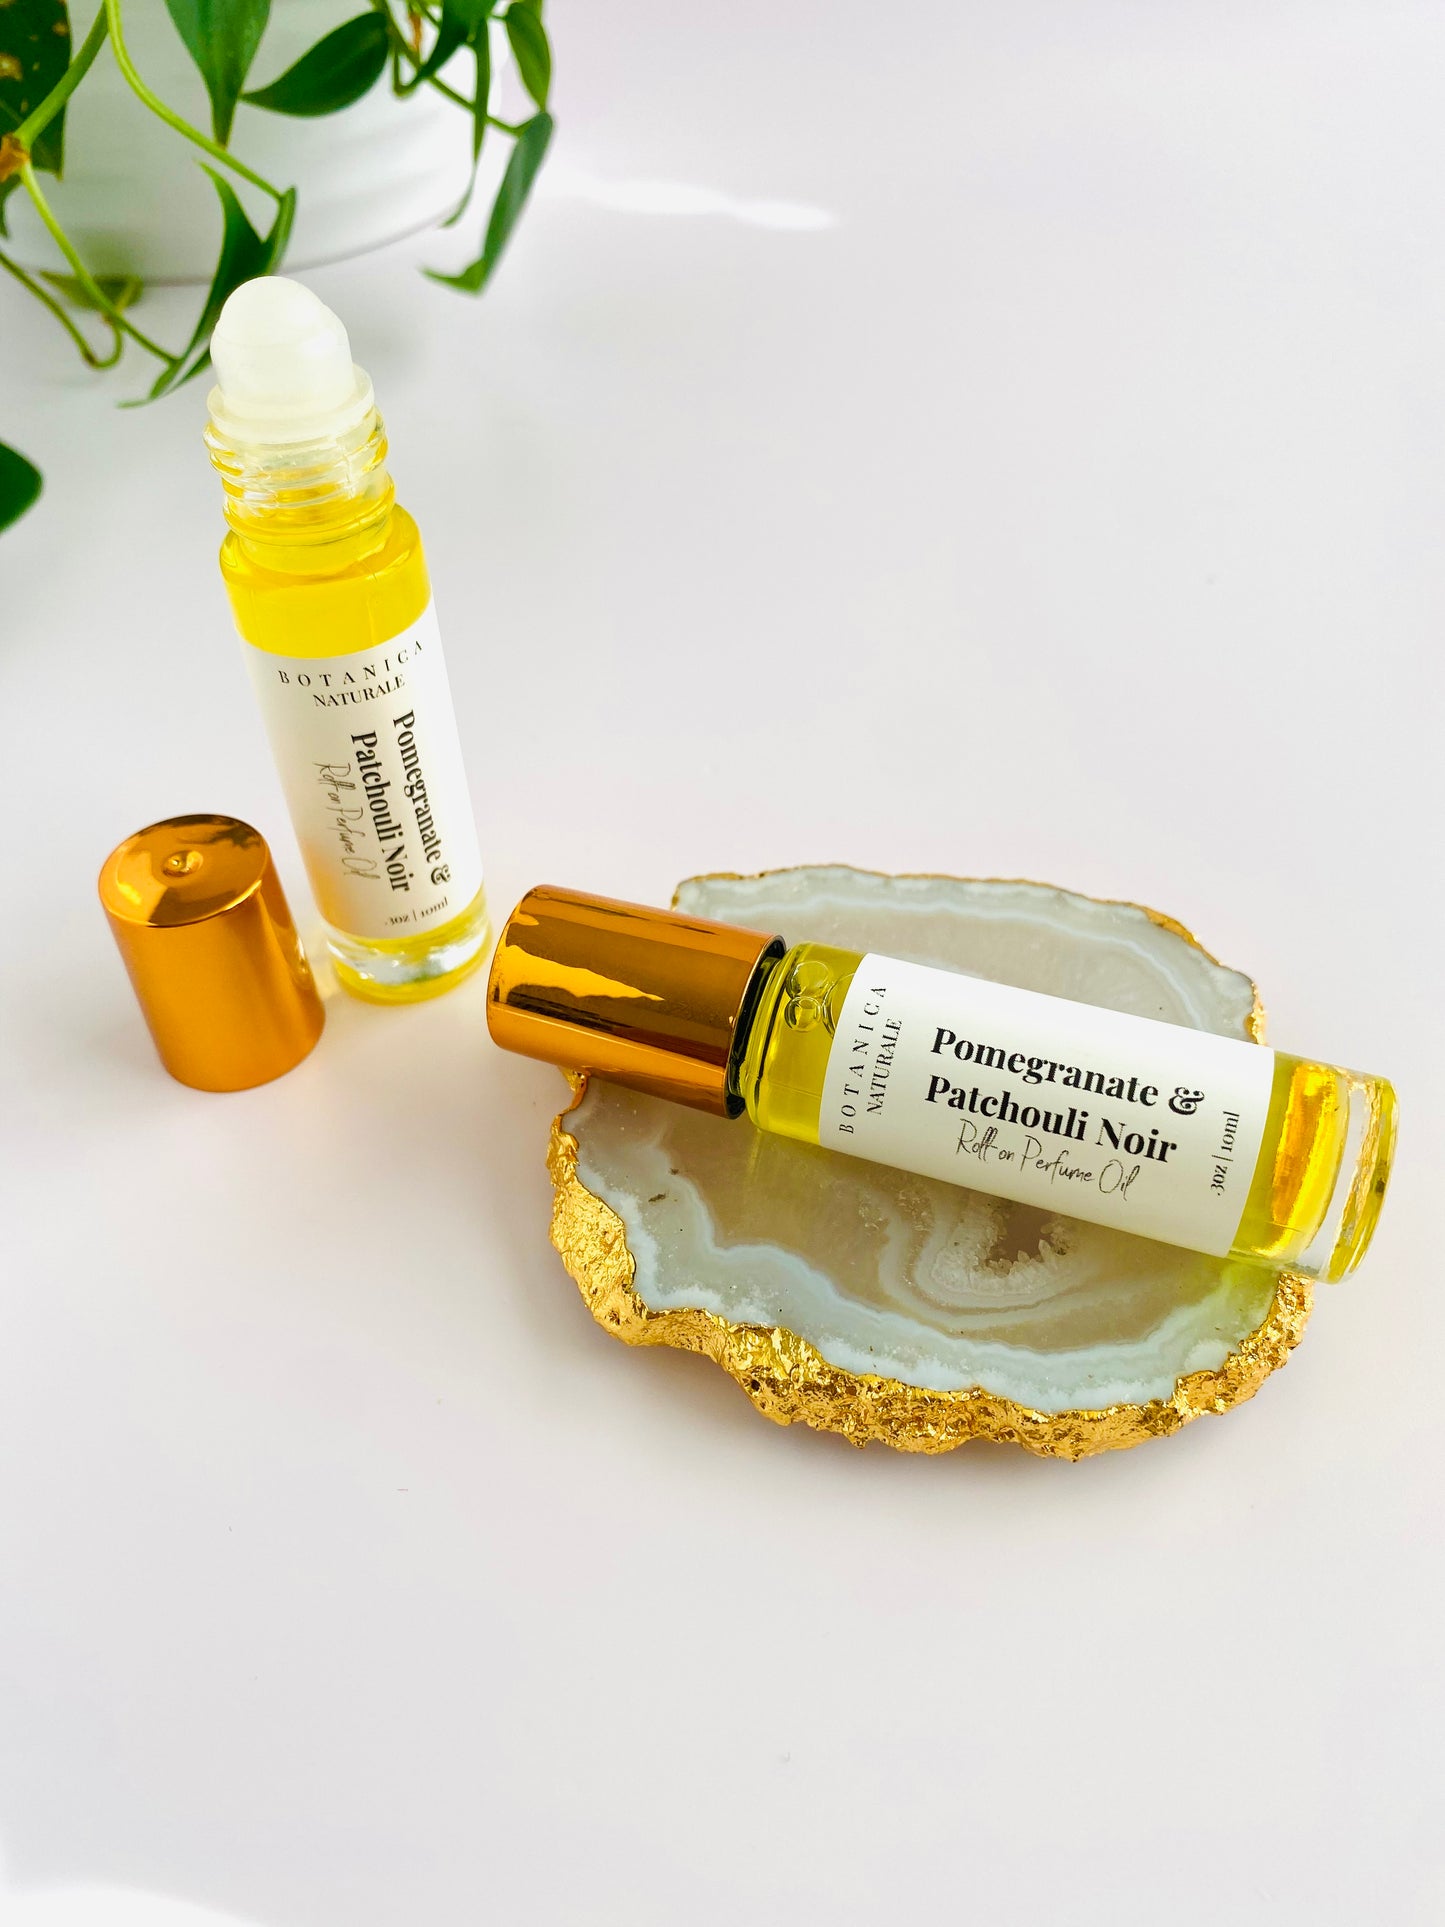 Pomegranate & Patchouli Noir Perfume Oil - Inspired by Jo Malone Pomegranate Noir